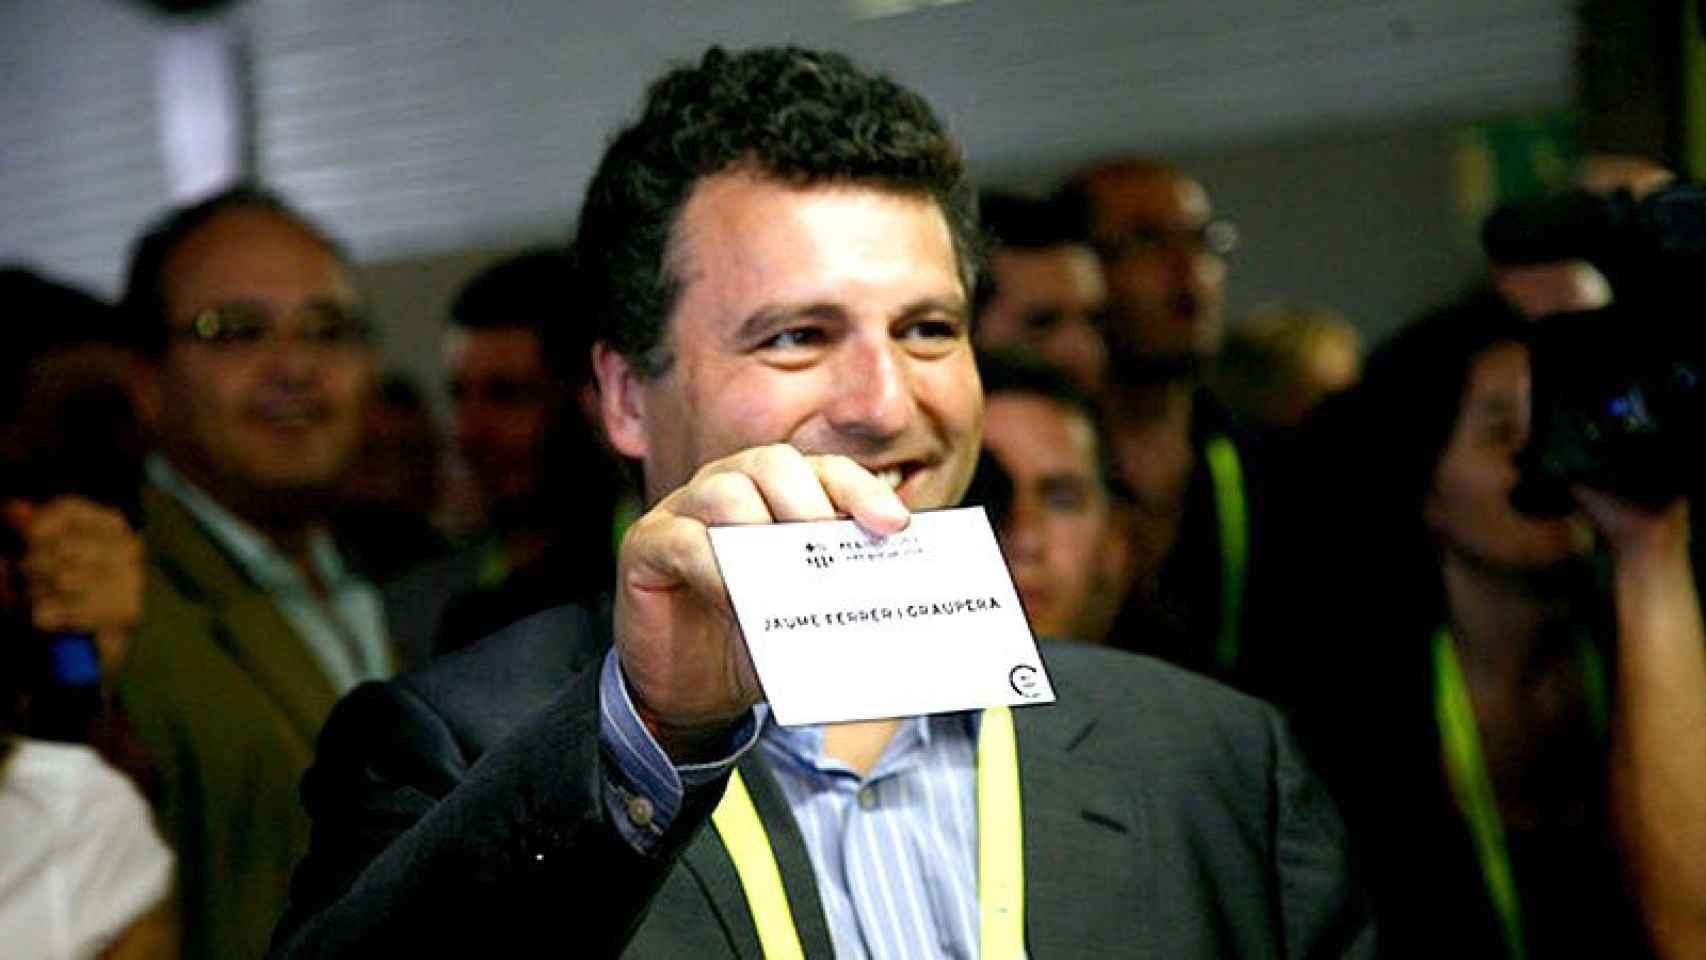 El candidato Jaume Ferrer vota durante la jornada electoral del Barça.